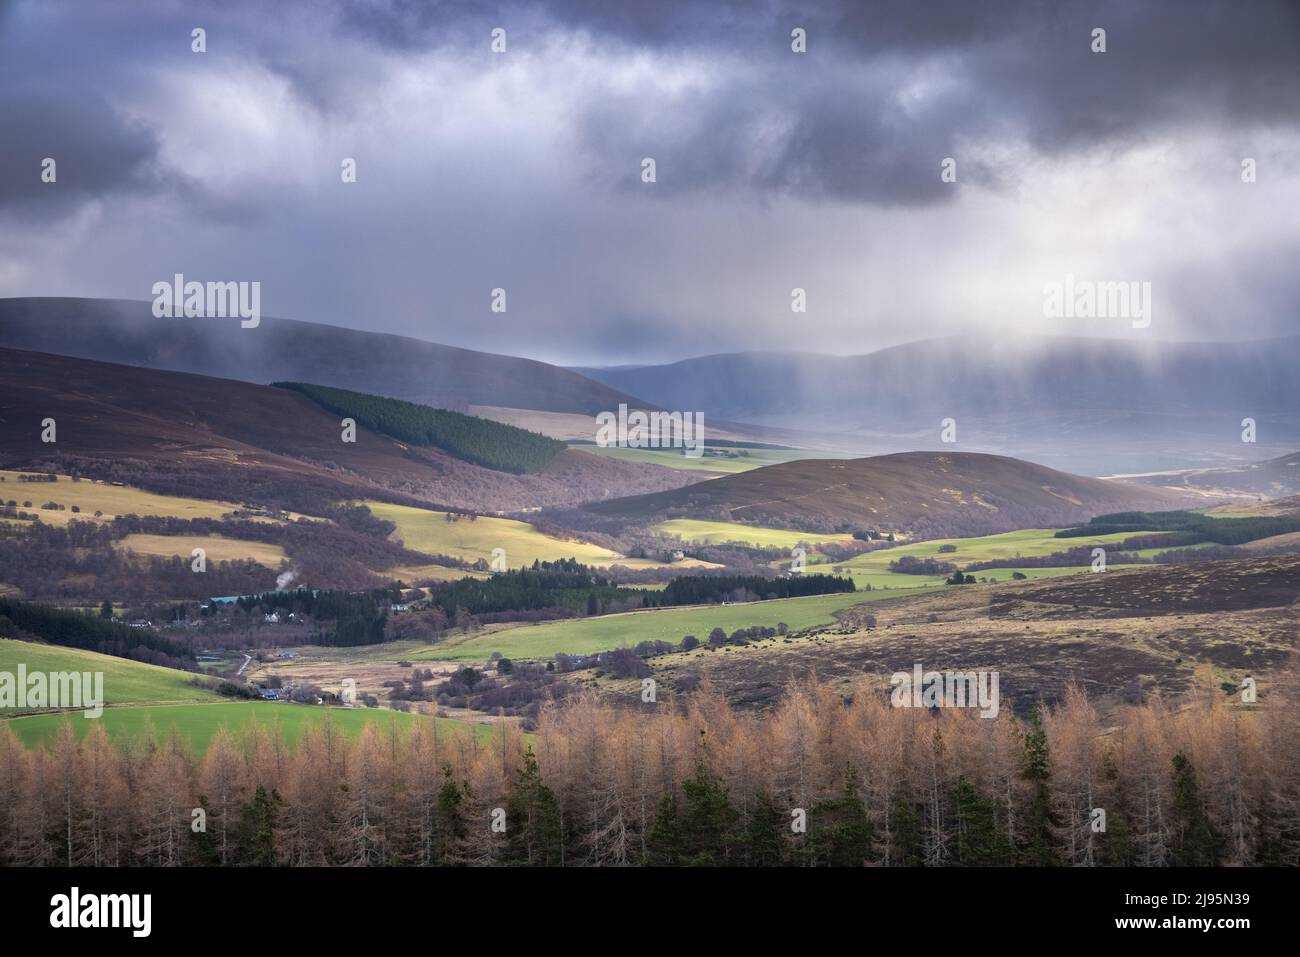 A rain shower over Glenlivet, Speyside, Scotland, UK Stock Photo